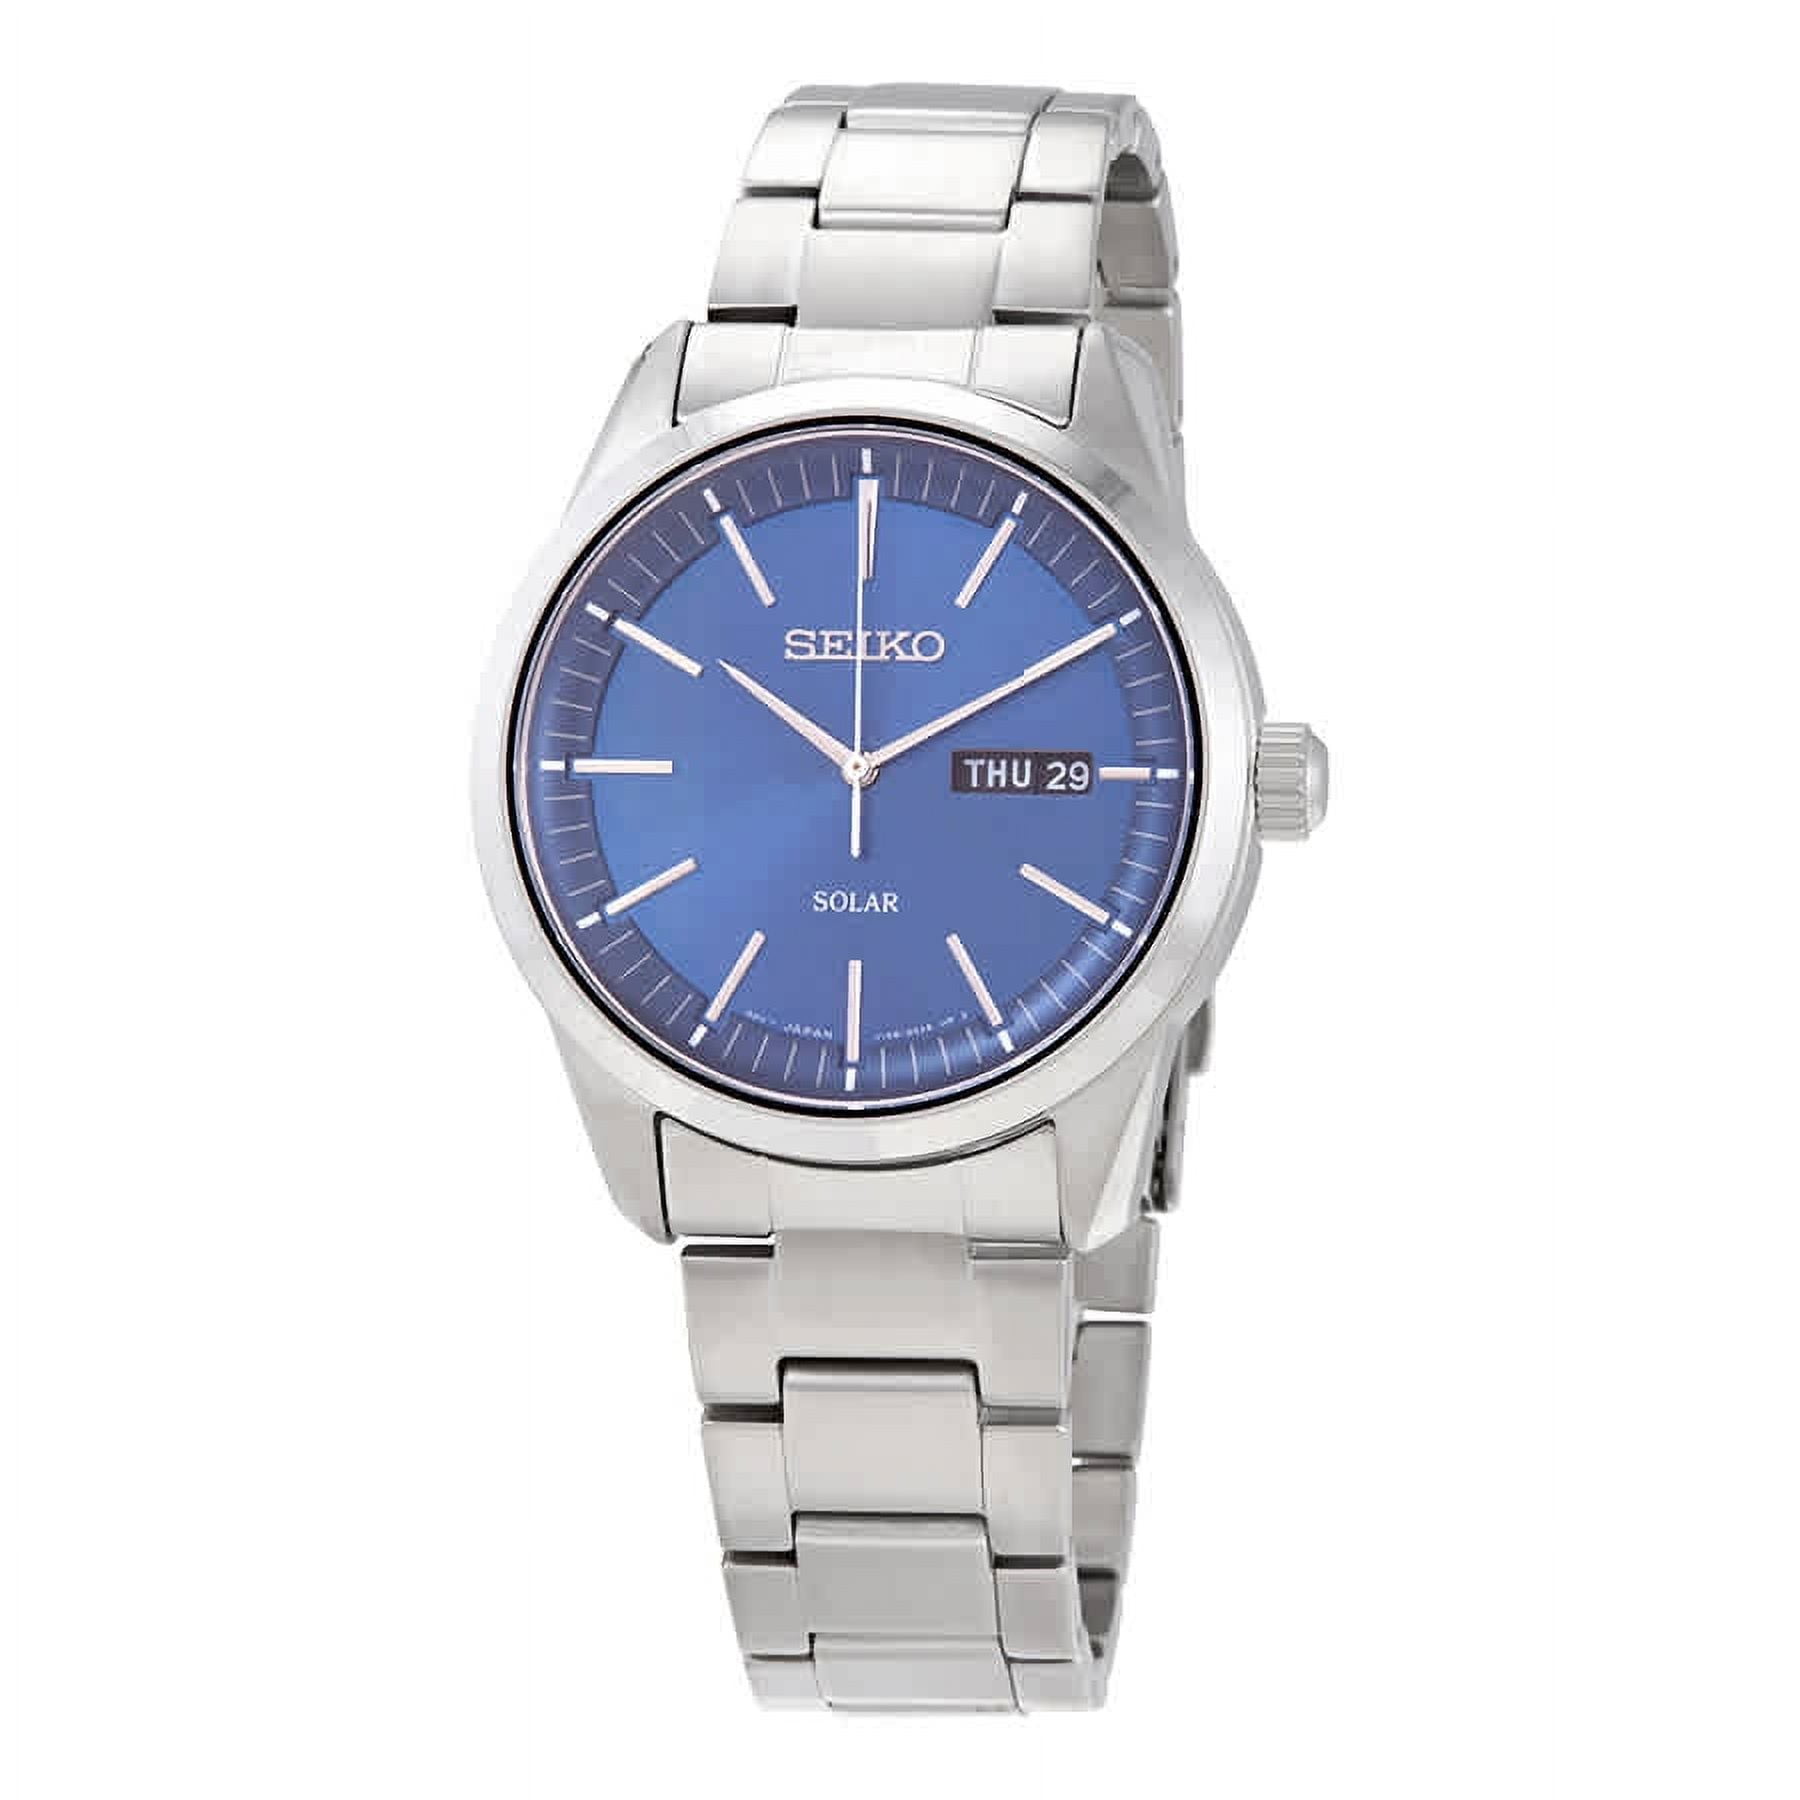 Seiko Solar Blue Dial Stainless Steel Men's Watch SNE525P1 - Walmart.com